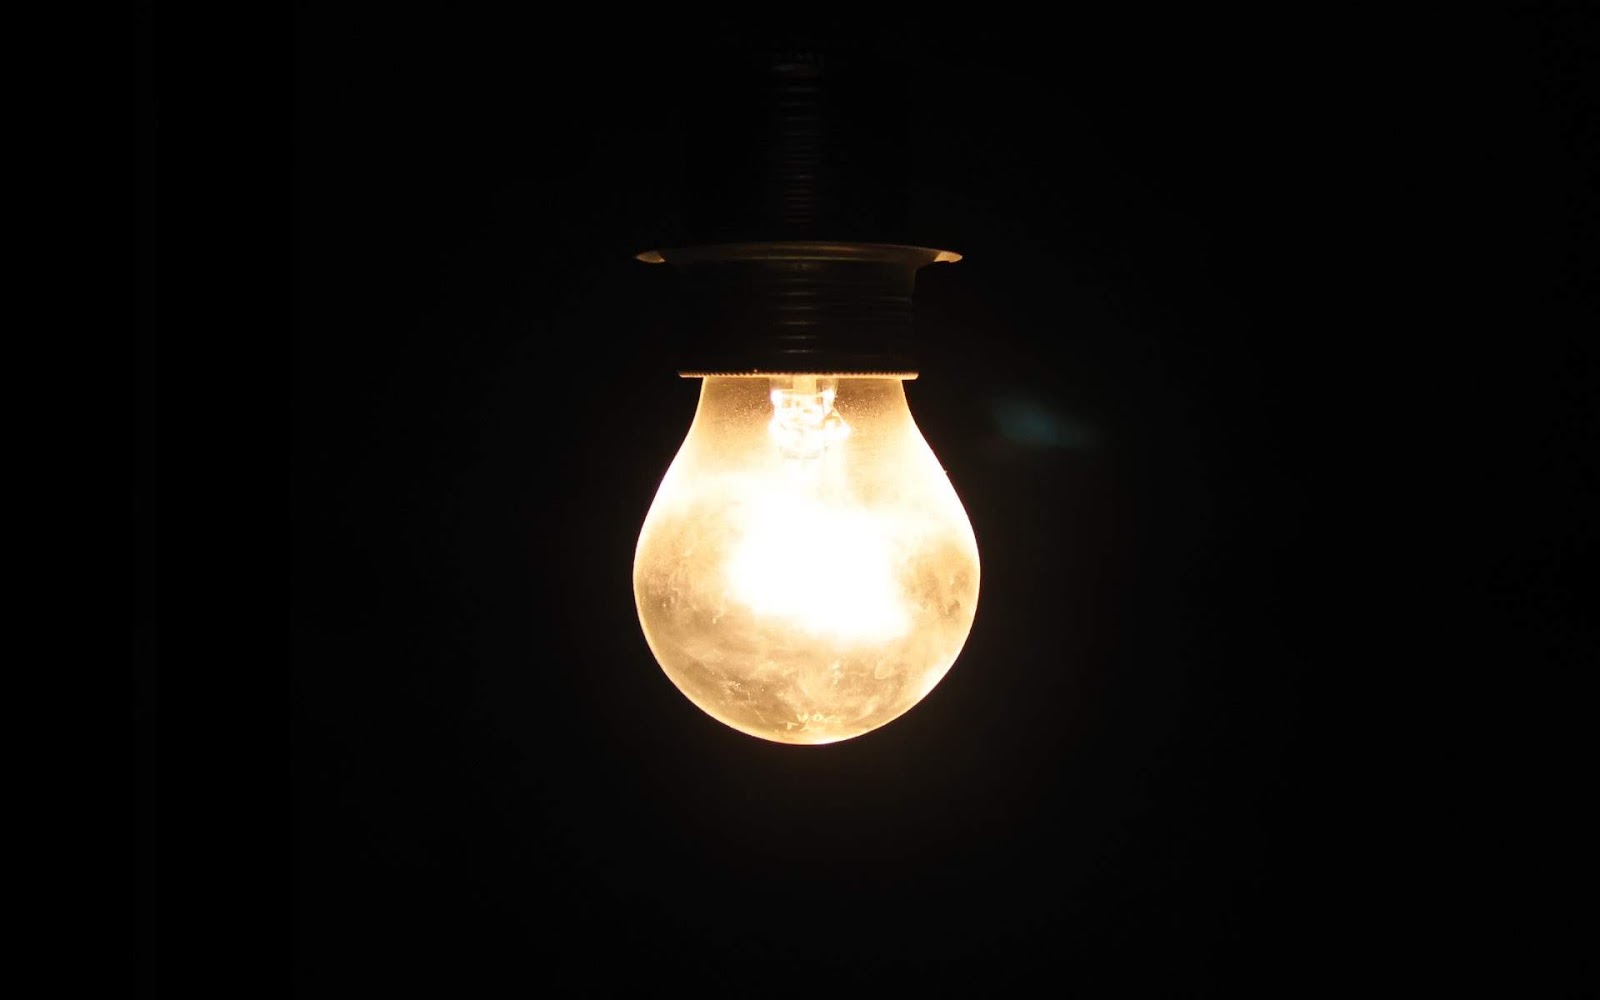 electric-glass-bulb-lamp-light-on-black-background-black-and-white-hd-wallpaper.jpg